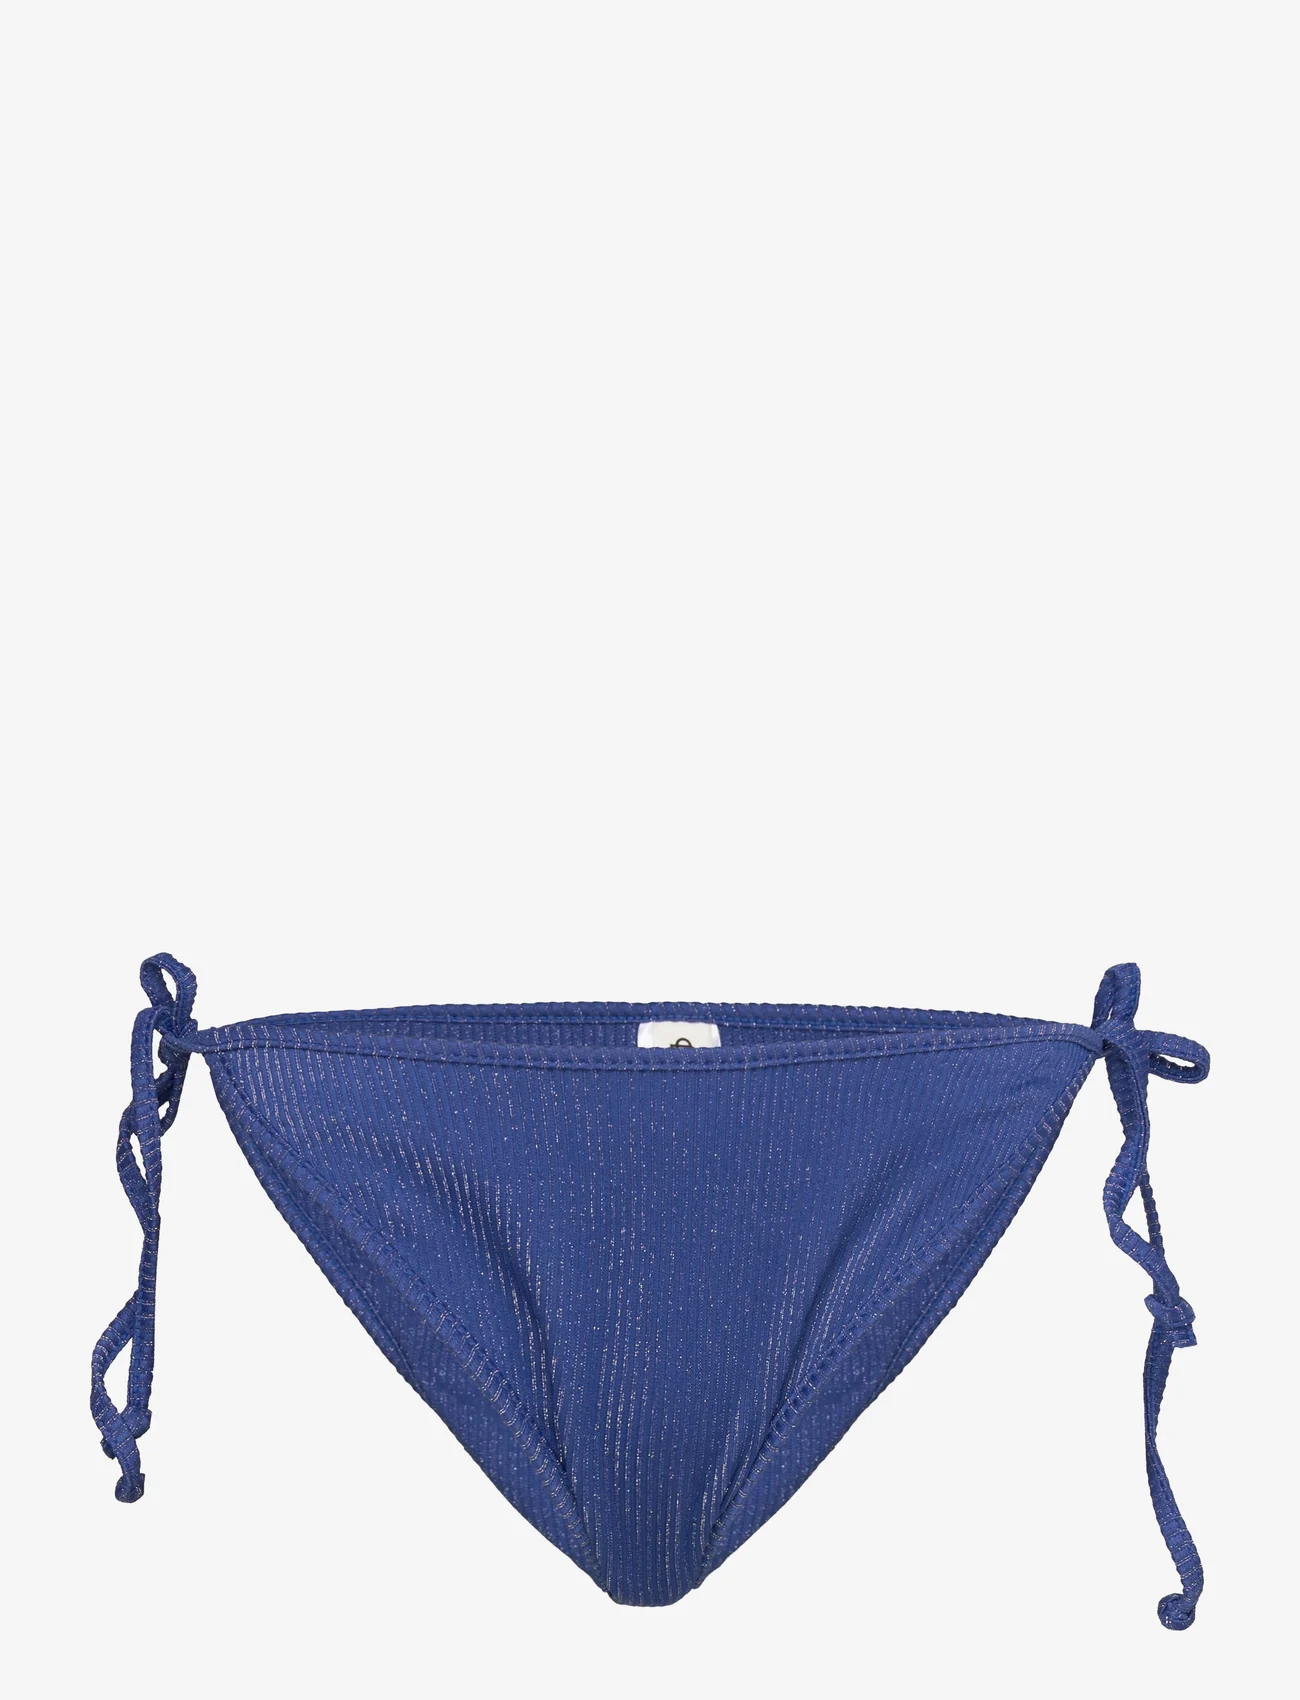 Becksöndergaard - Lyx Baila Bikini Tanga - bikinis mit seitenbändern - surf the web blue - 0